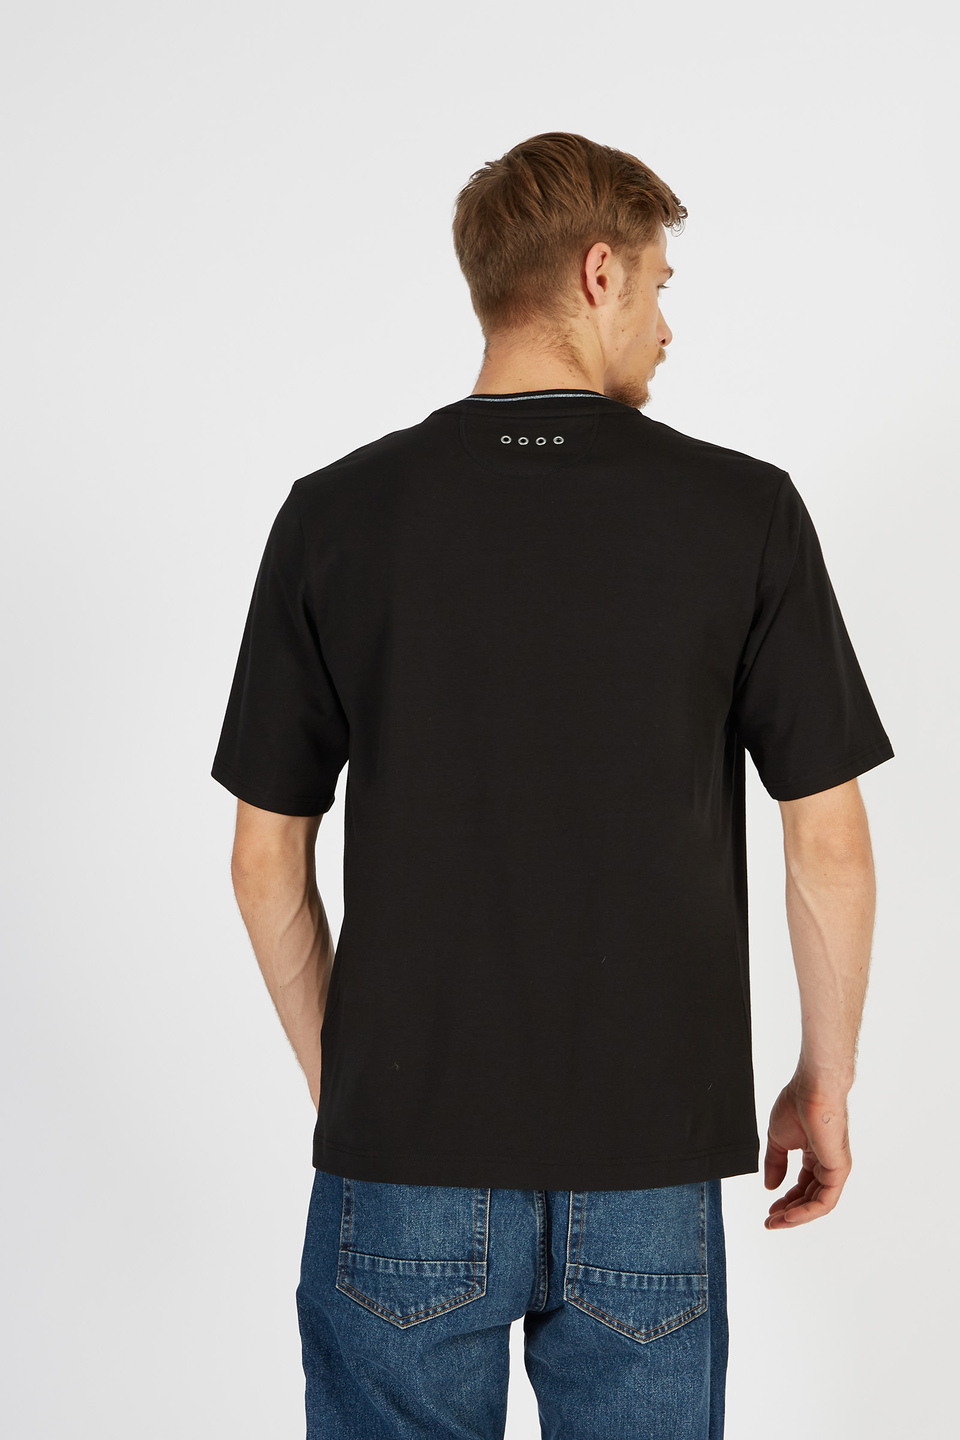 Men’s short-sleeved round neck stretch cotton t-shirt with regular fit | La Martina - Official Online Shop